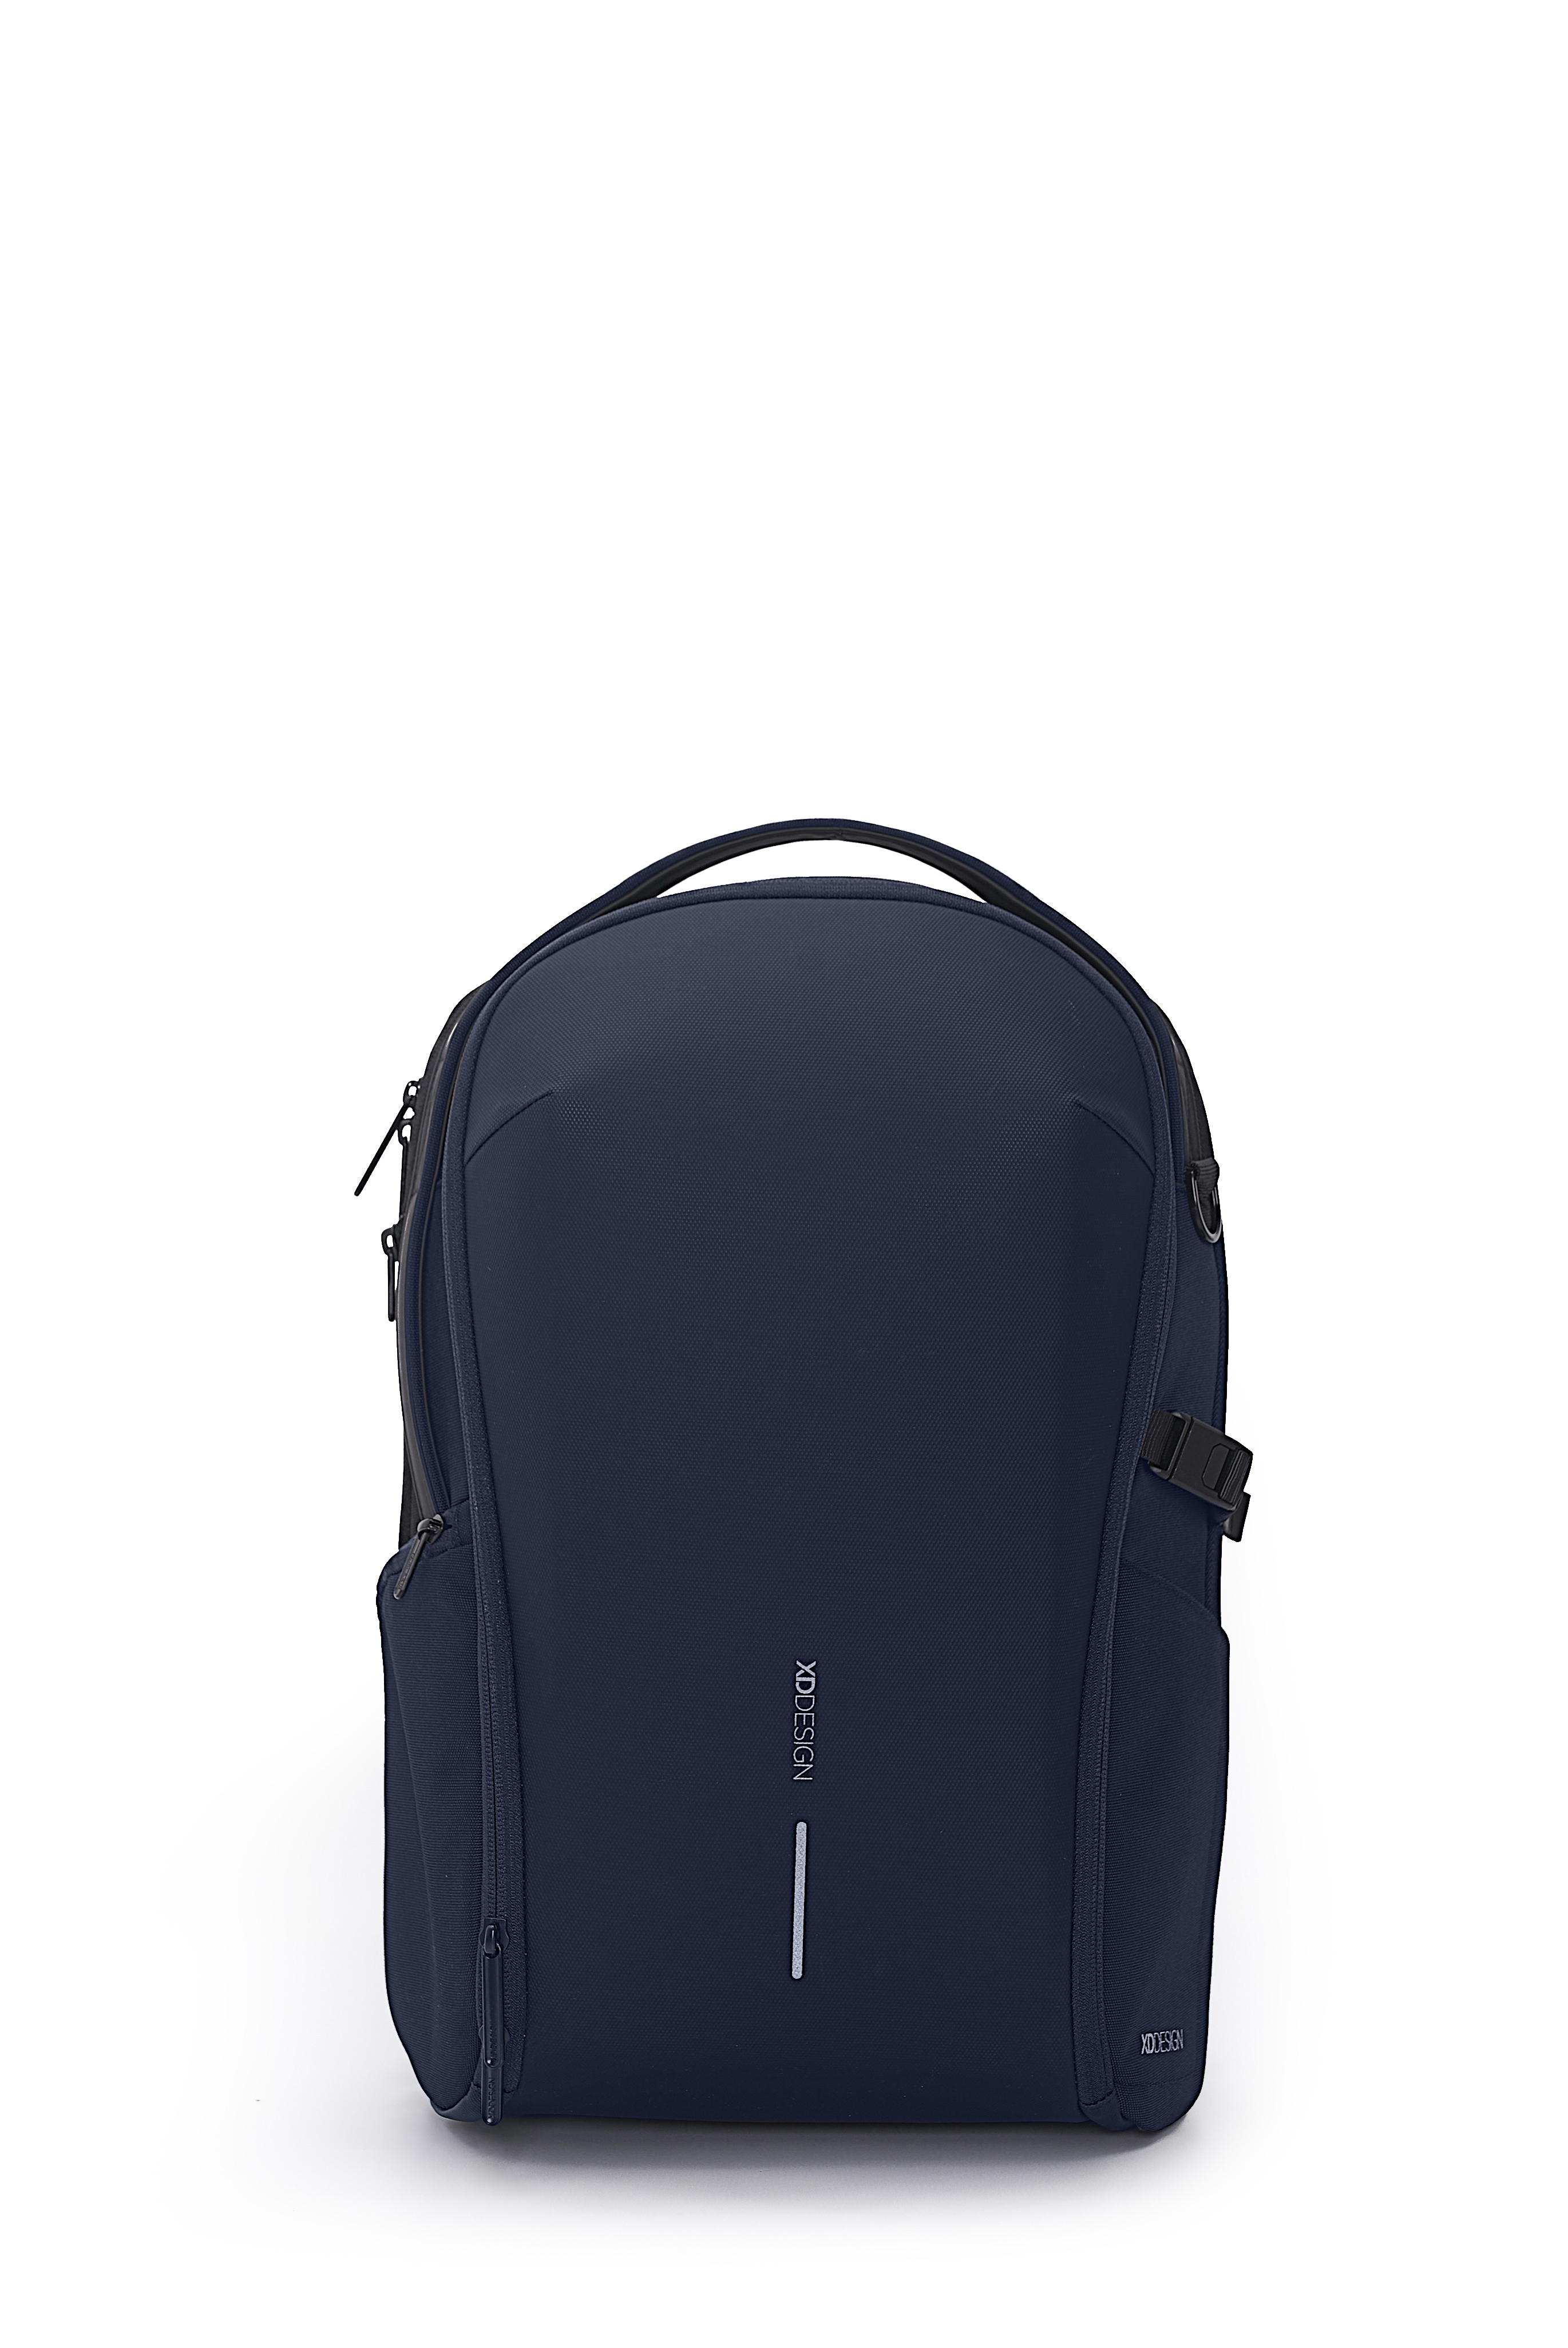 XD Design - Bobby Bizz backpack - Navy (P705.935)